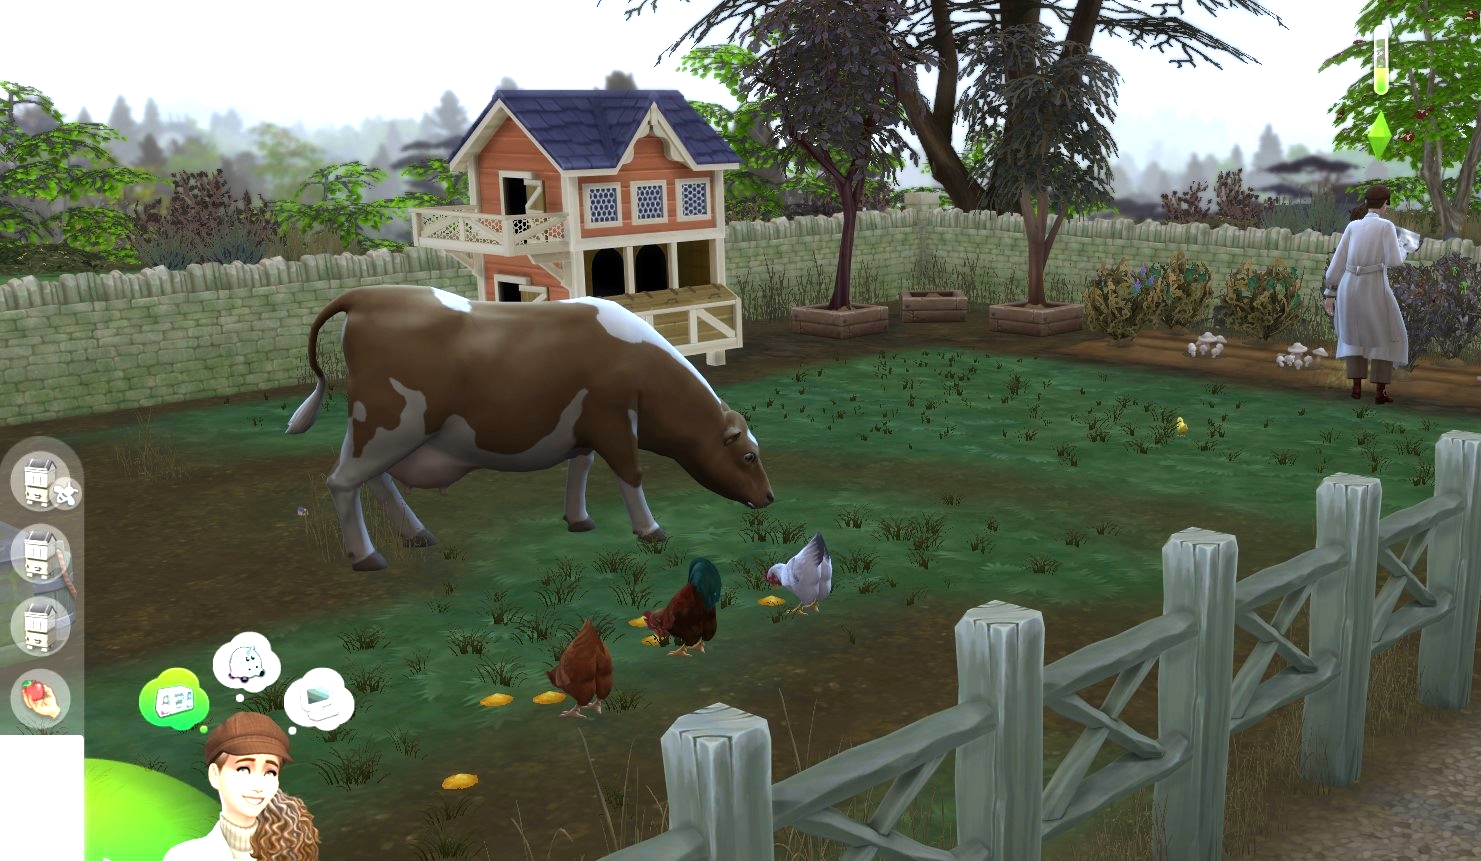 Free-Range - The Sims 4 Mods - CurseForge